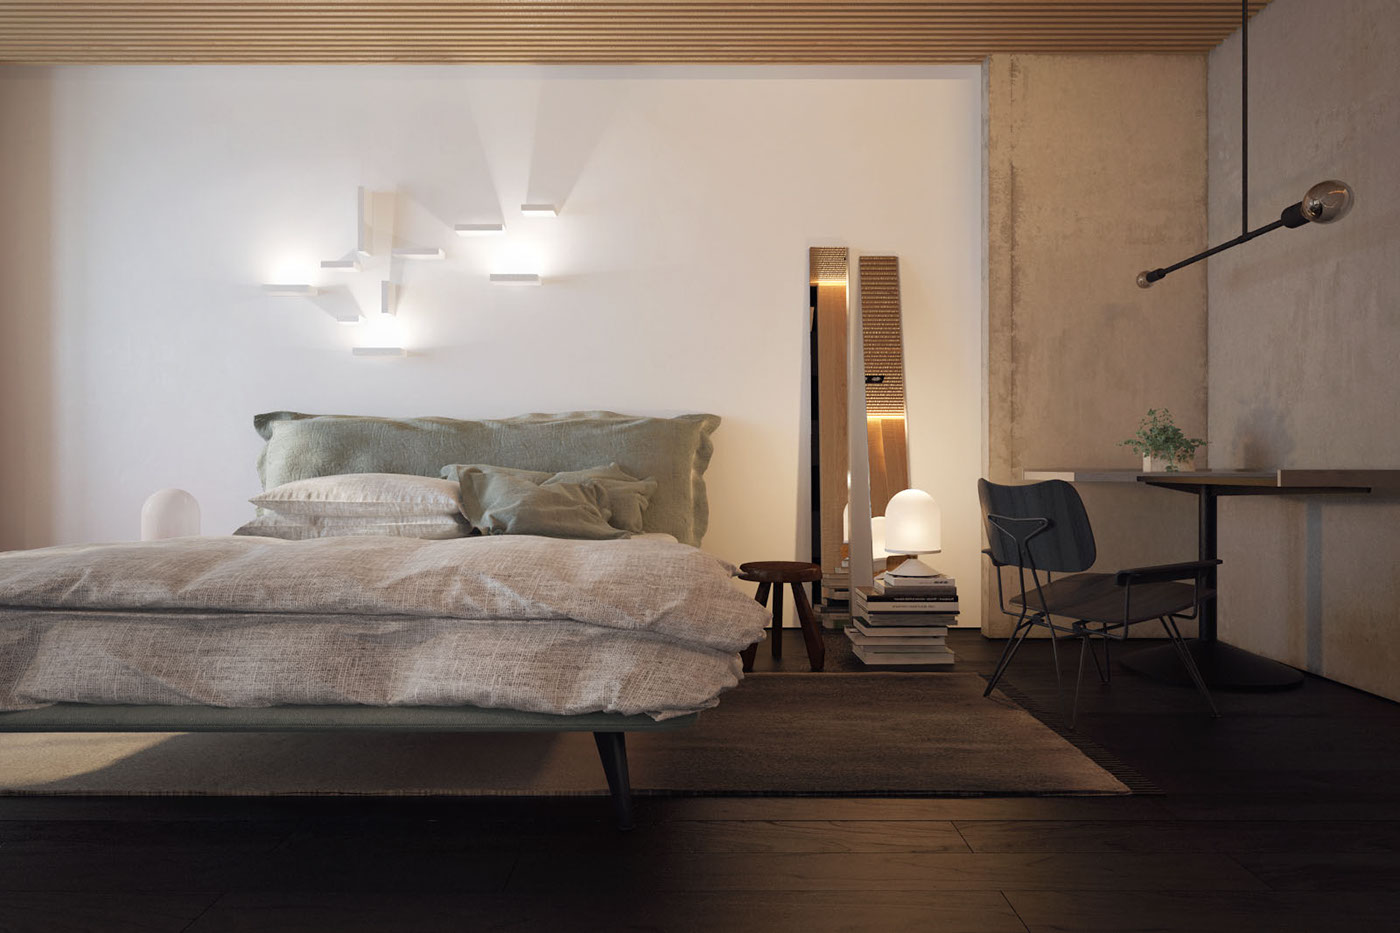 teal-duvet-bar-lights-inspired-bedroom